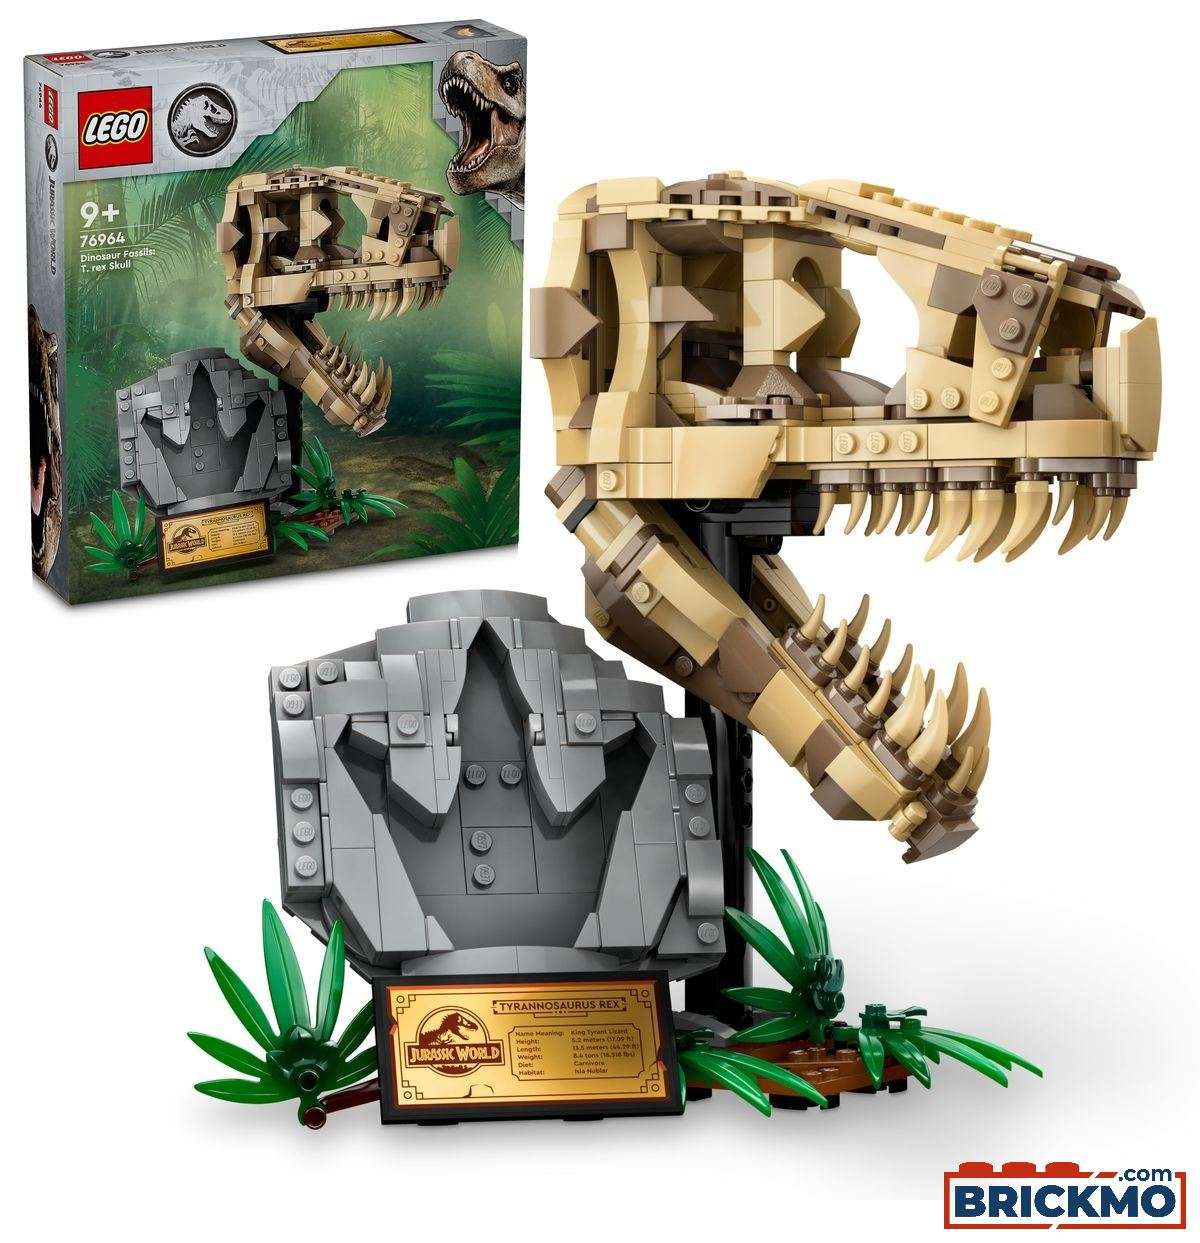 LEGO Jurassic World 76964 Dinosaurfossiler: T. rex-kranium 76964